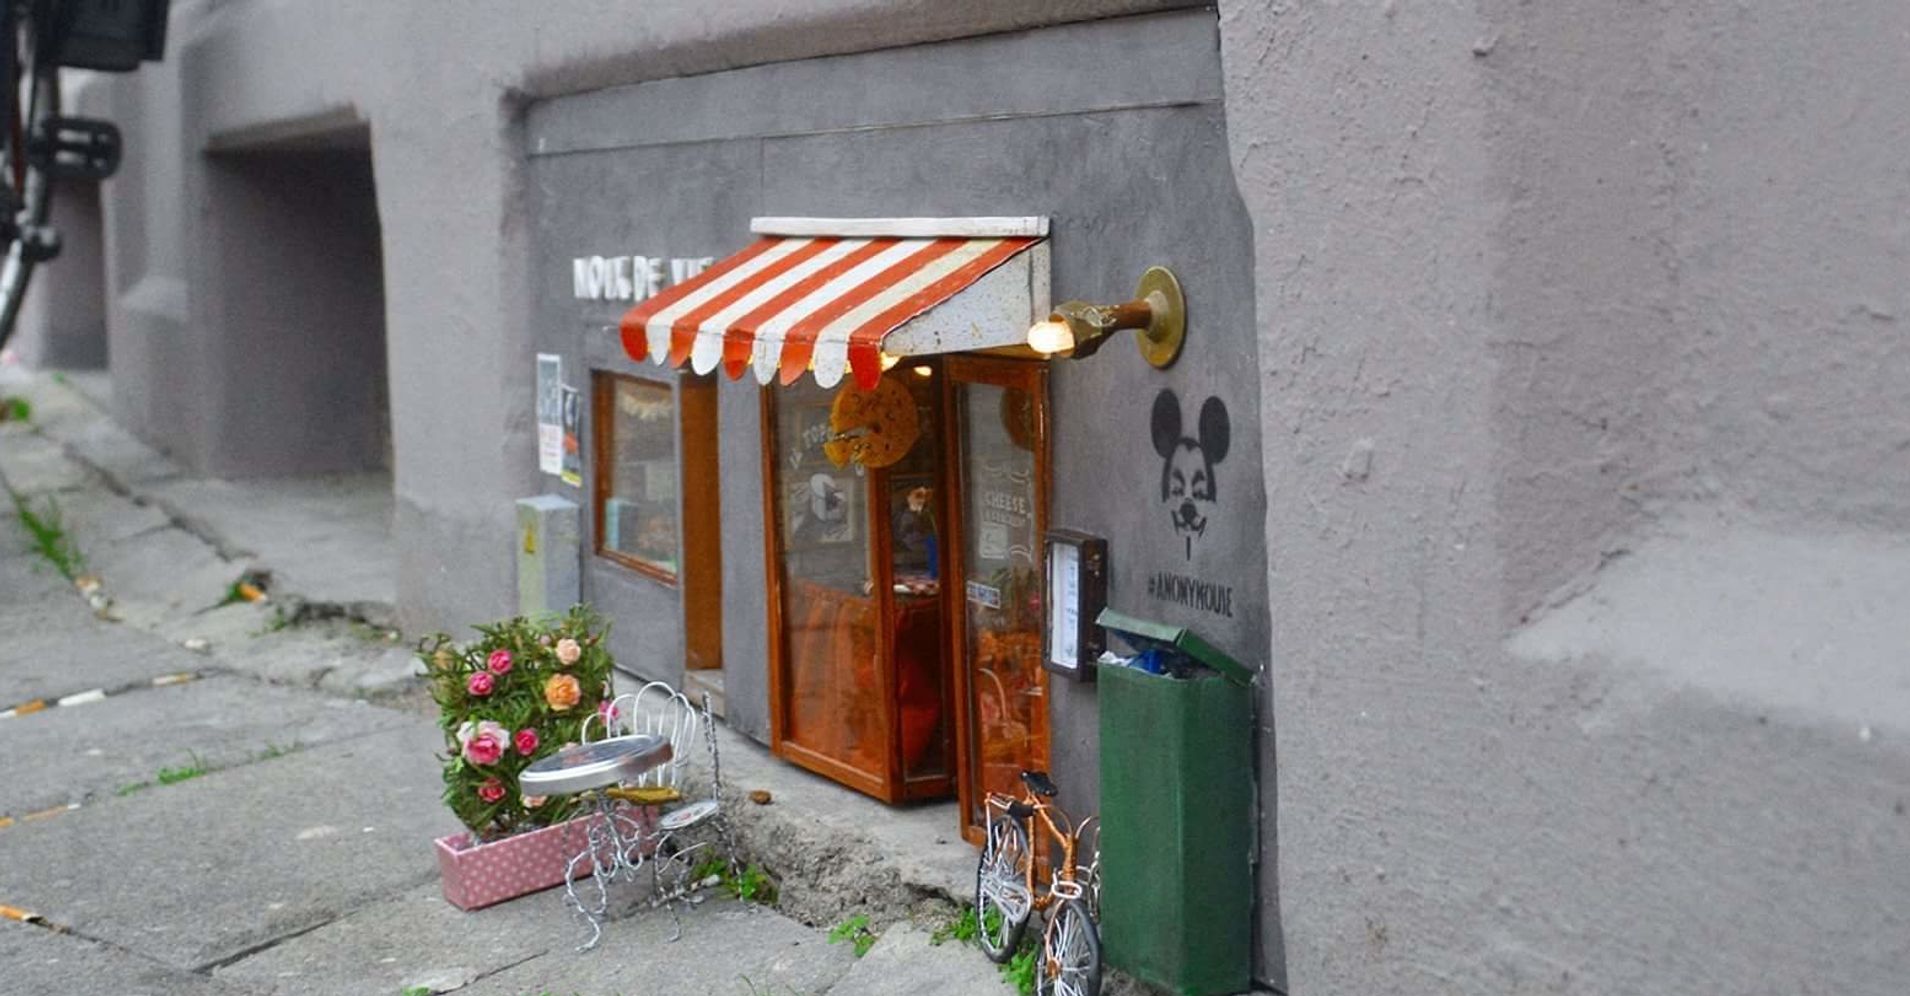 mouse anonymouse tiny shops sweden mice cafe ripleys believe street sized secret opens